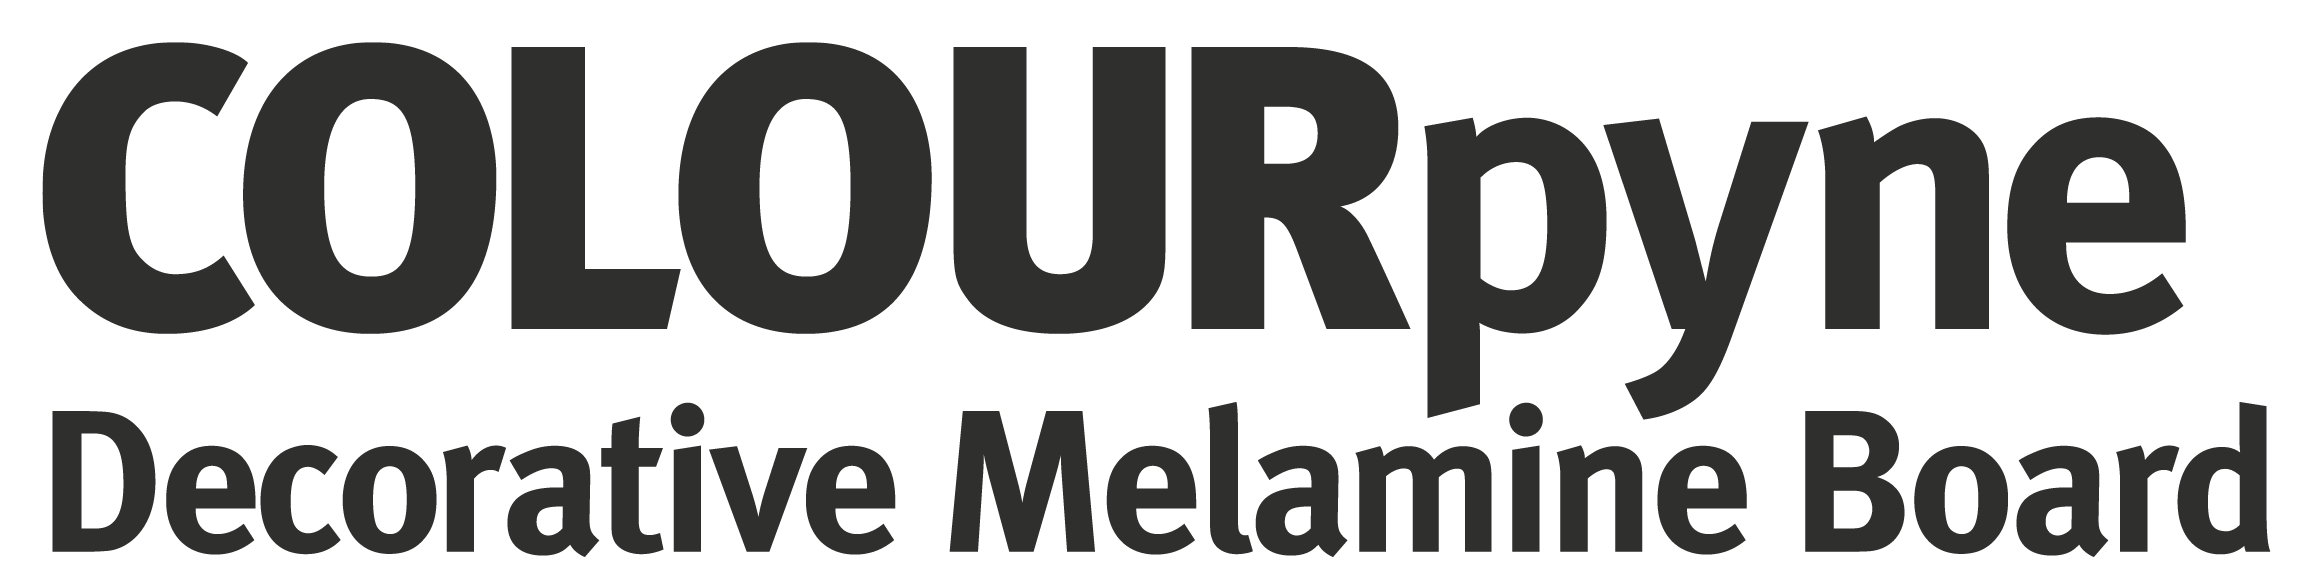 COLOURpyne Decorative Melamine Board